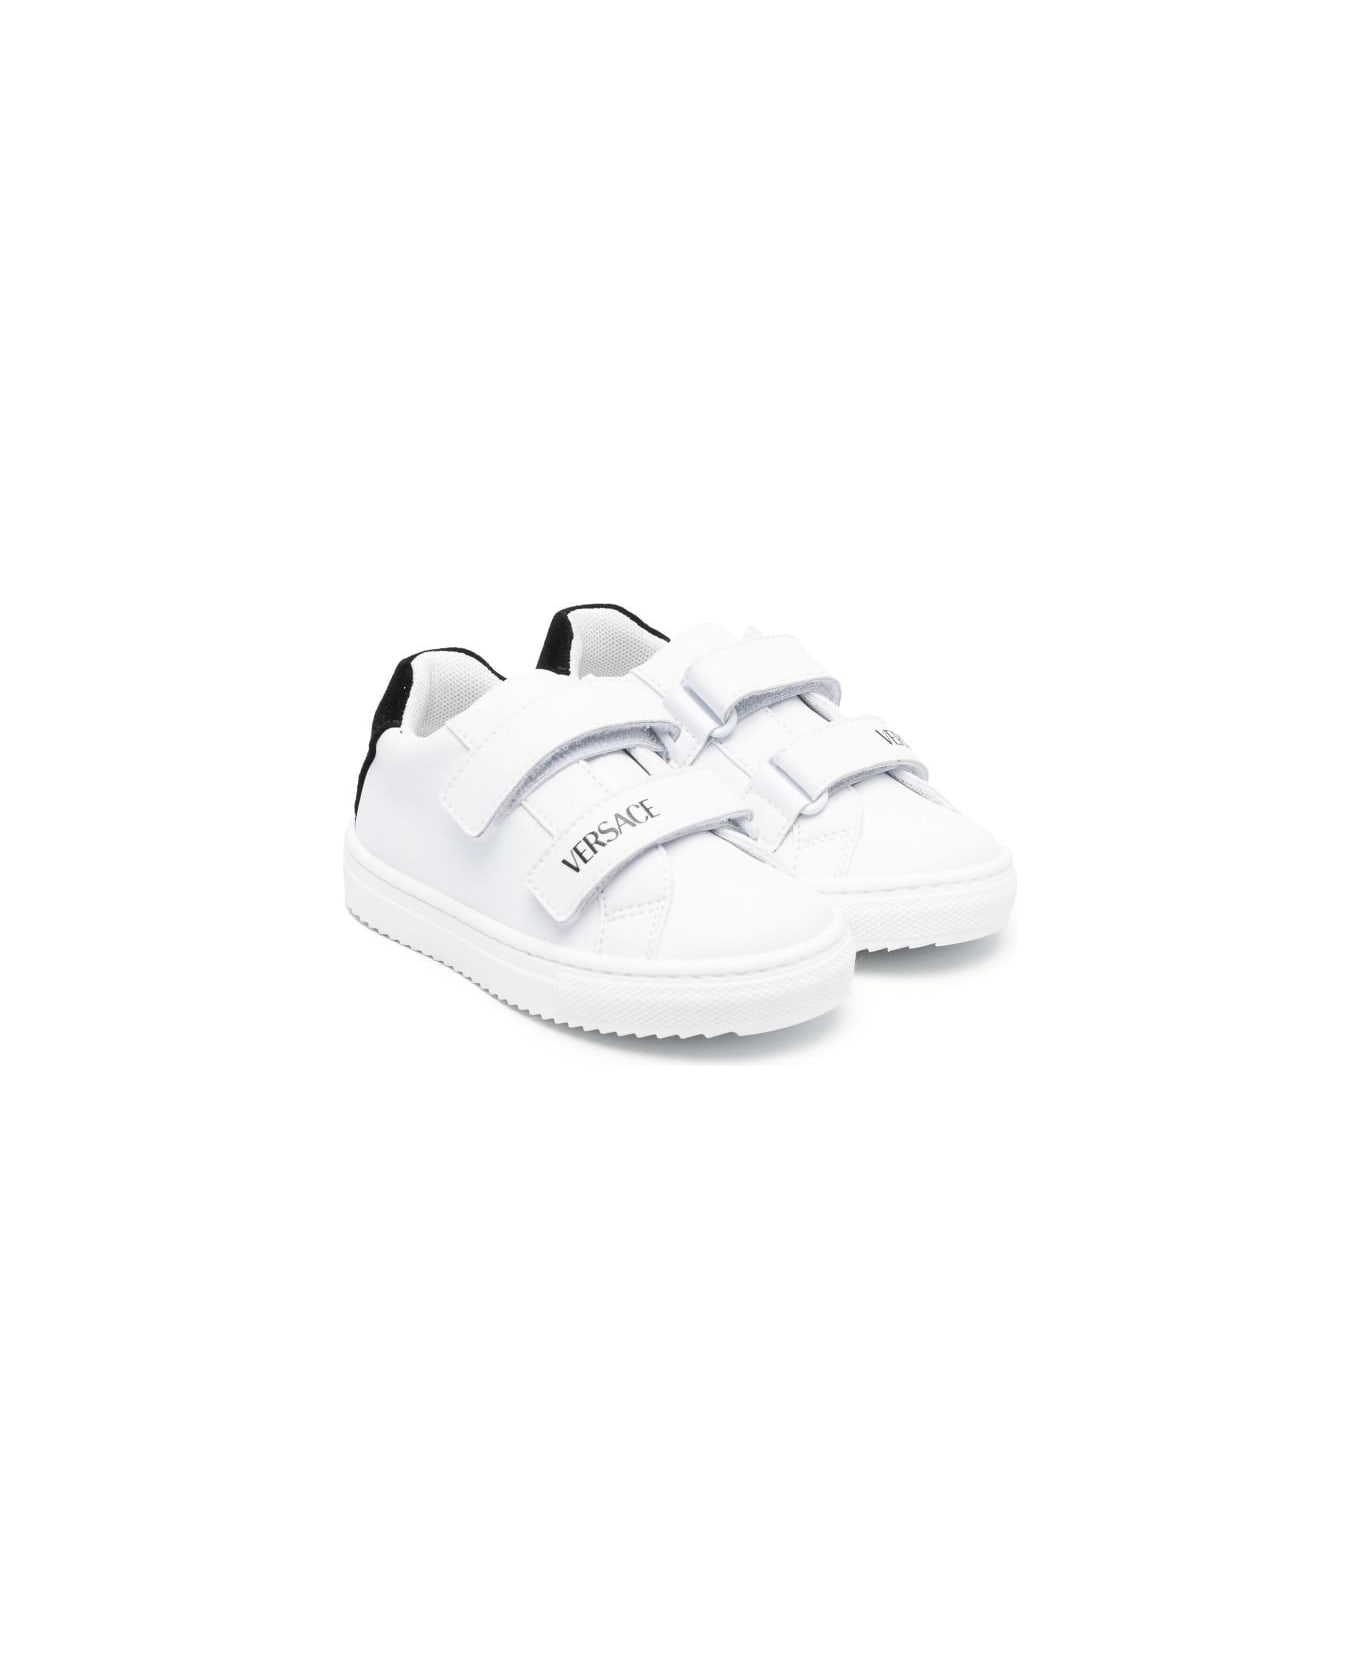 Versace Sneakers Bianche In Pelle Bambino - Bianco シューズ